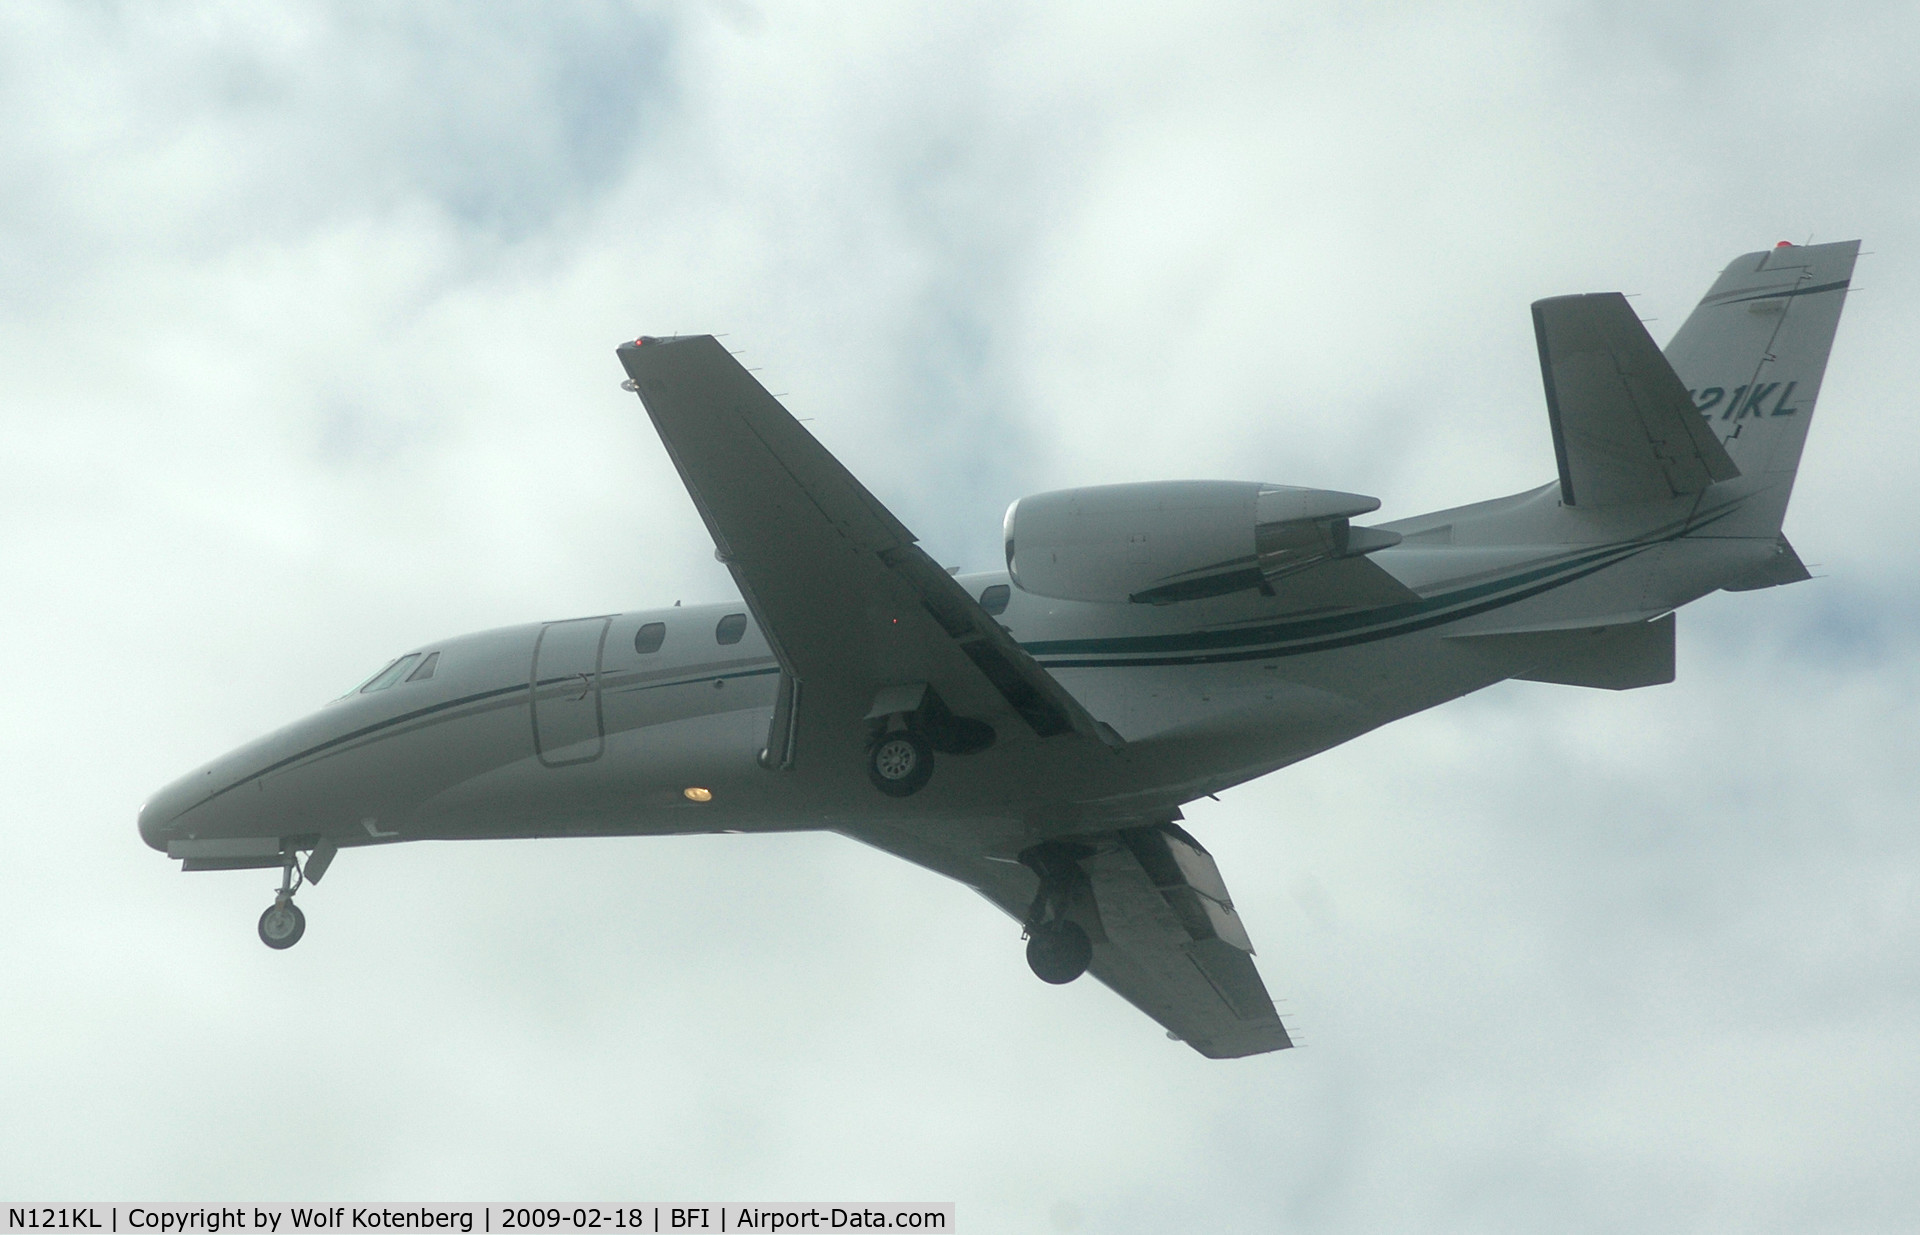 N121KL, 2007 Cessna 560XL C/N 560-5720, in flight, seconds from touchdown